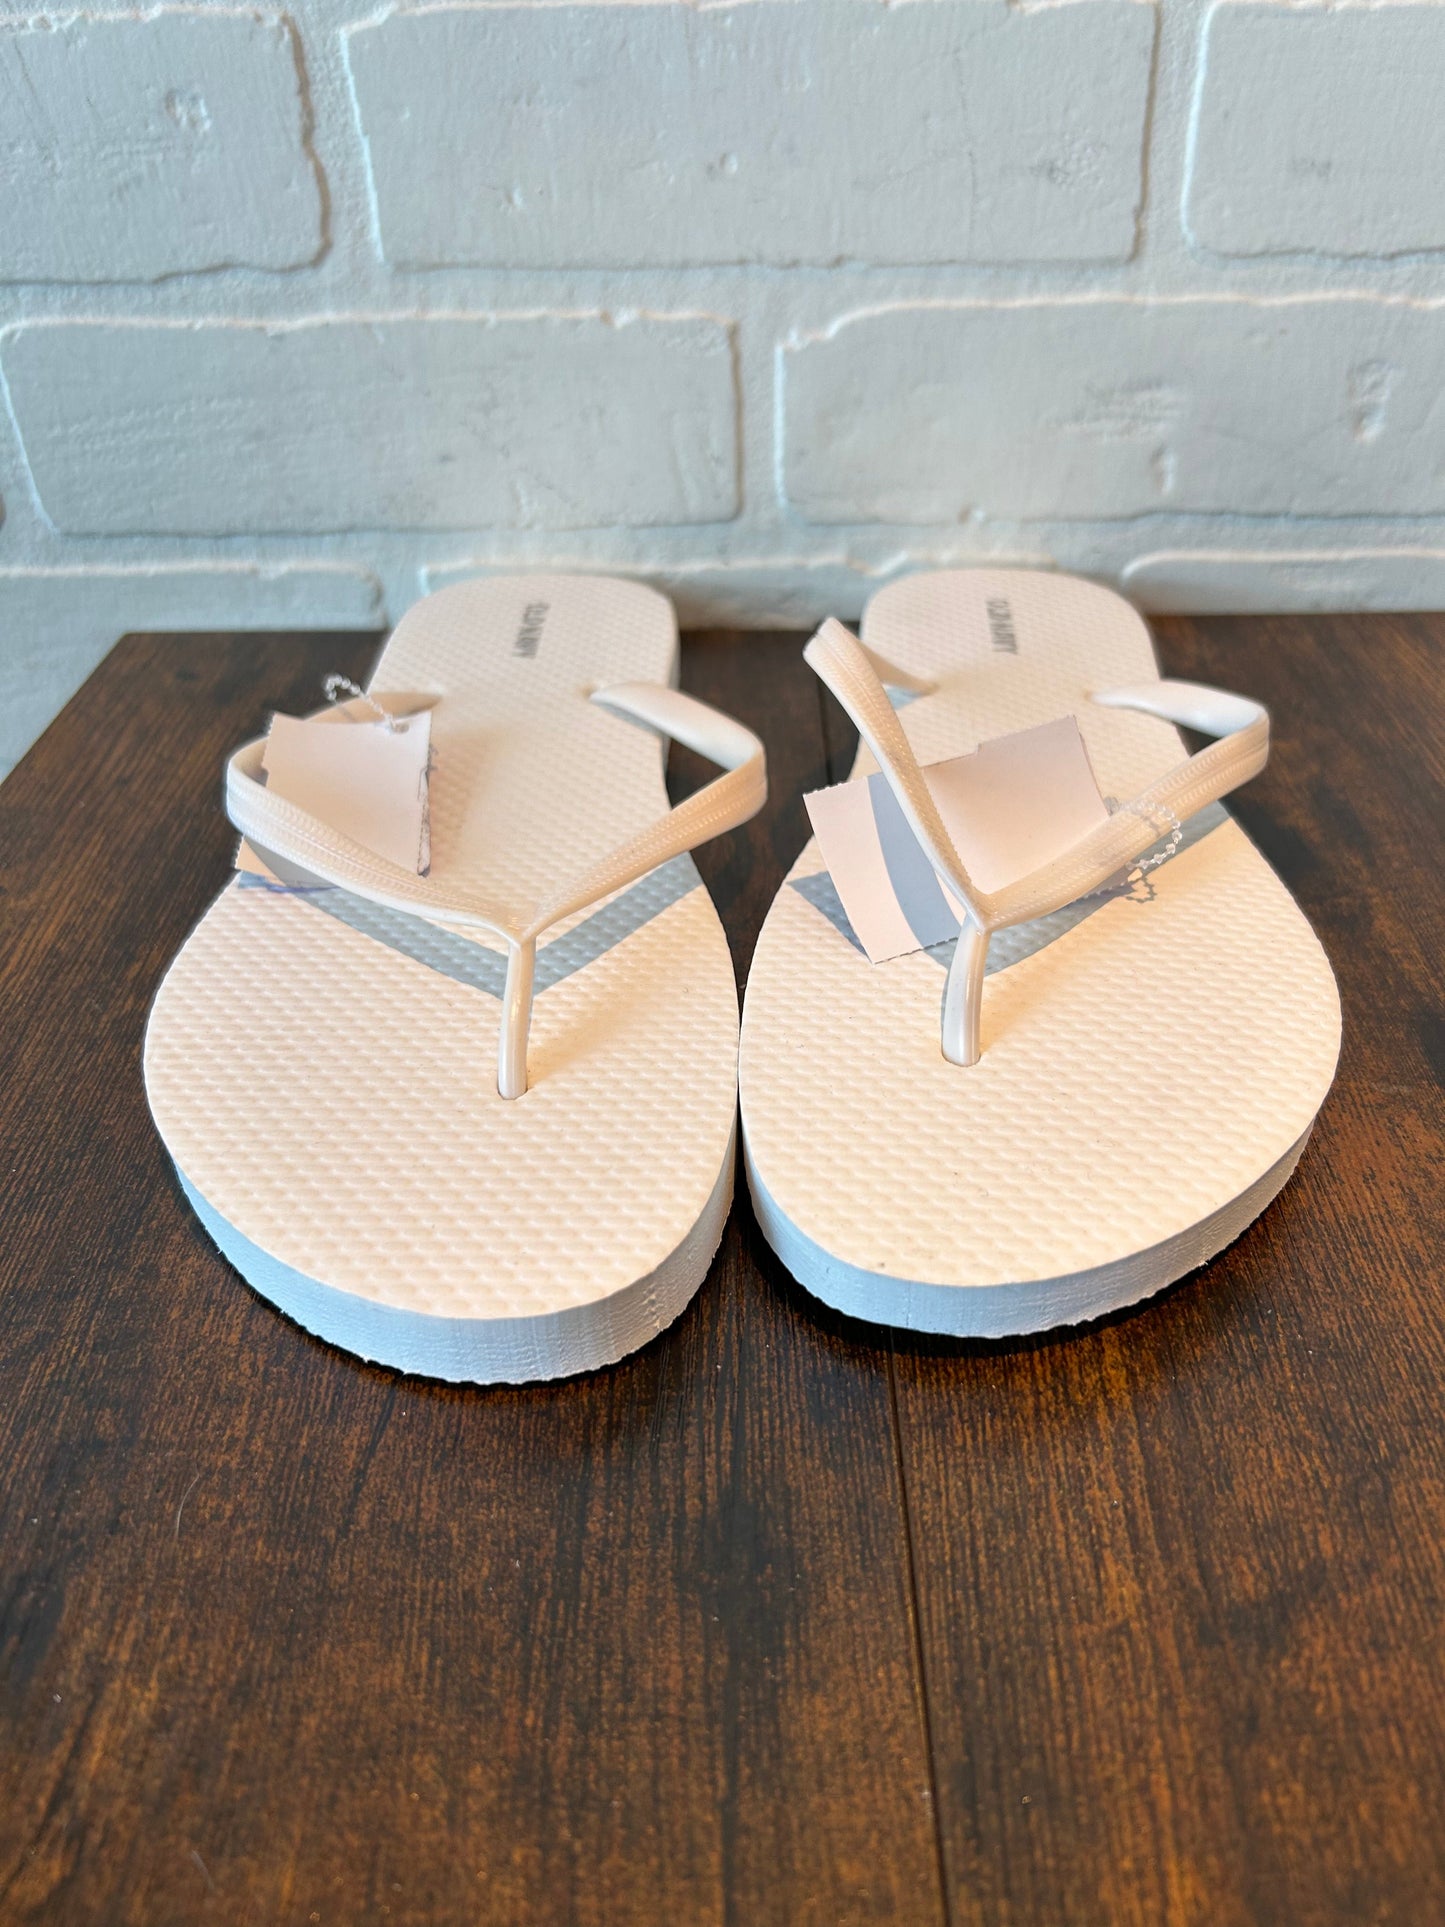 White Sandals Flip Flops H&m, Size 10